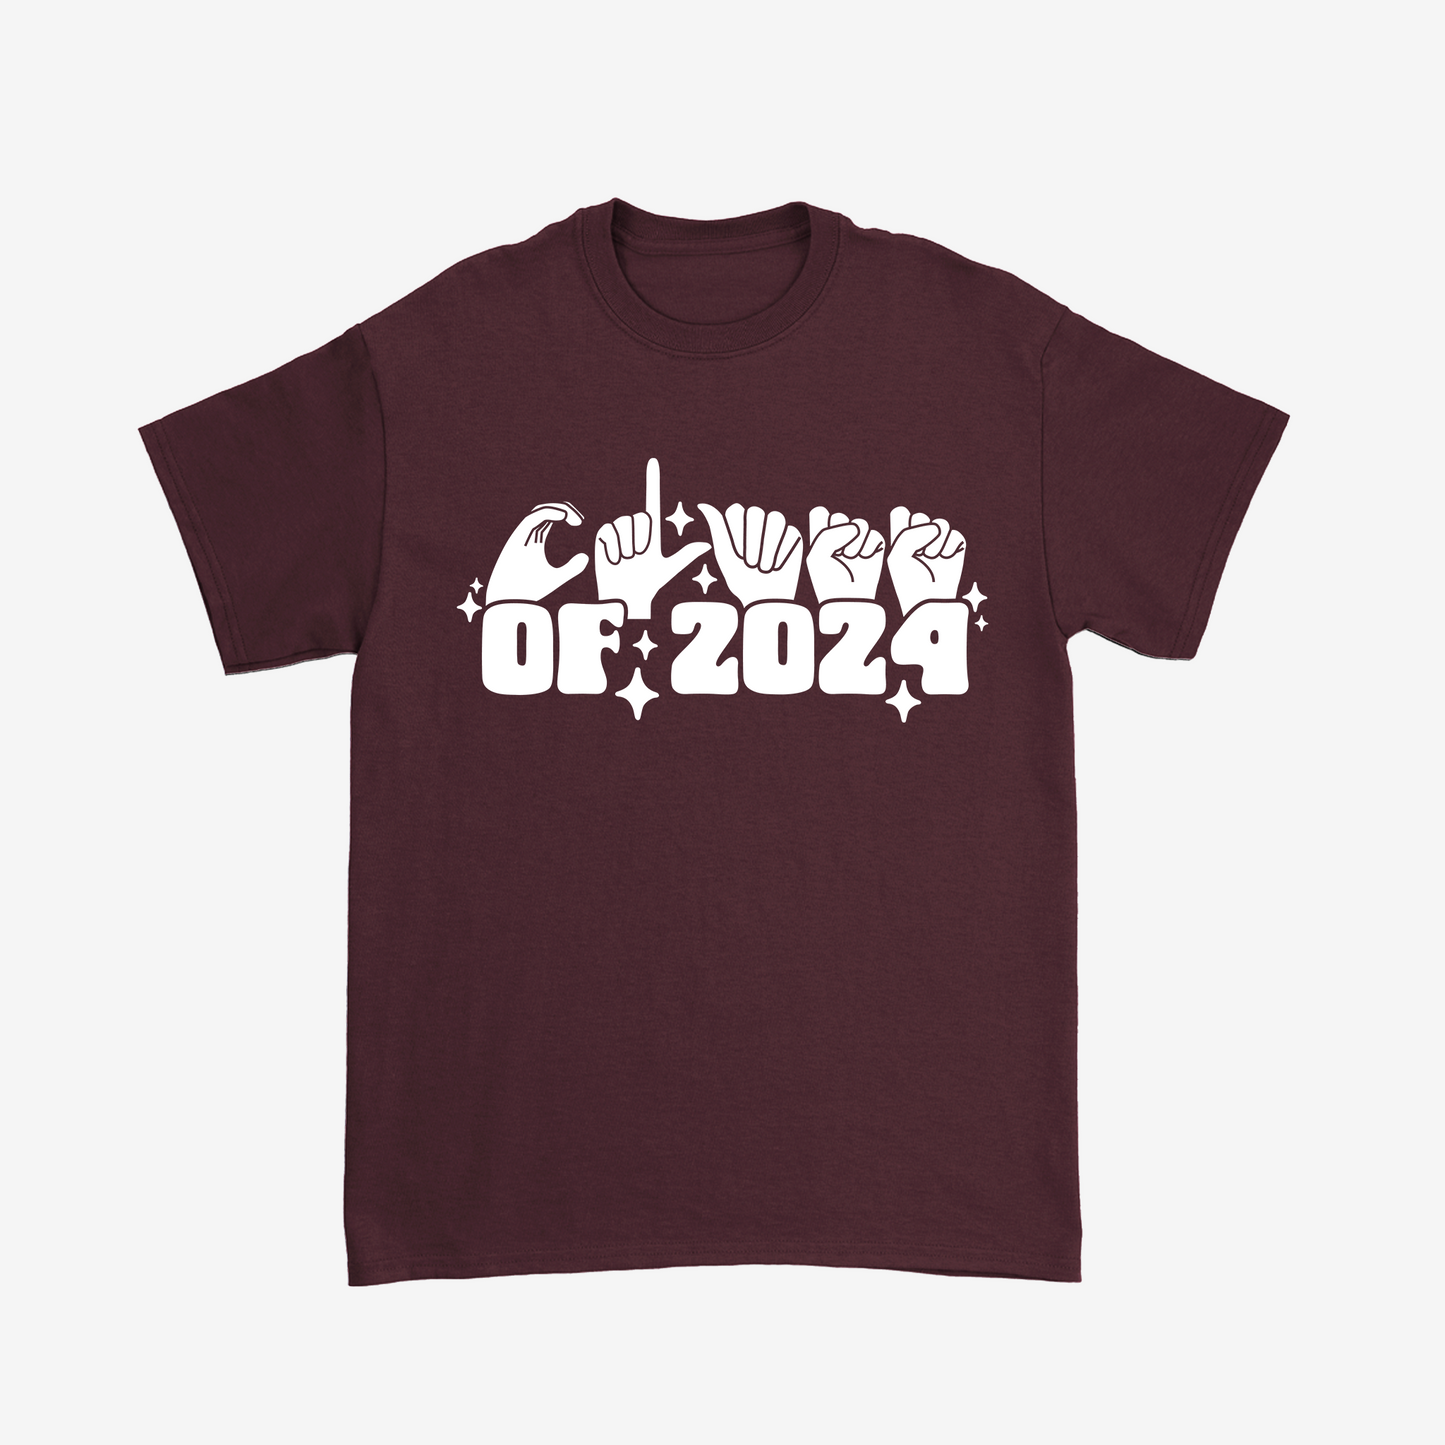 Class of 2024 Tee